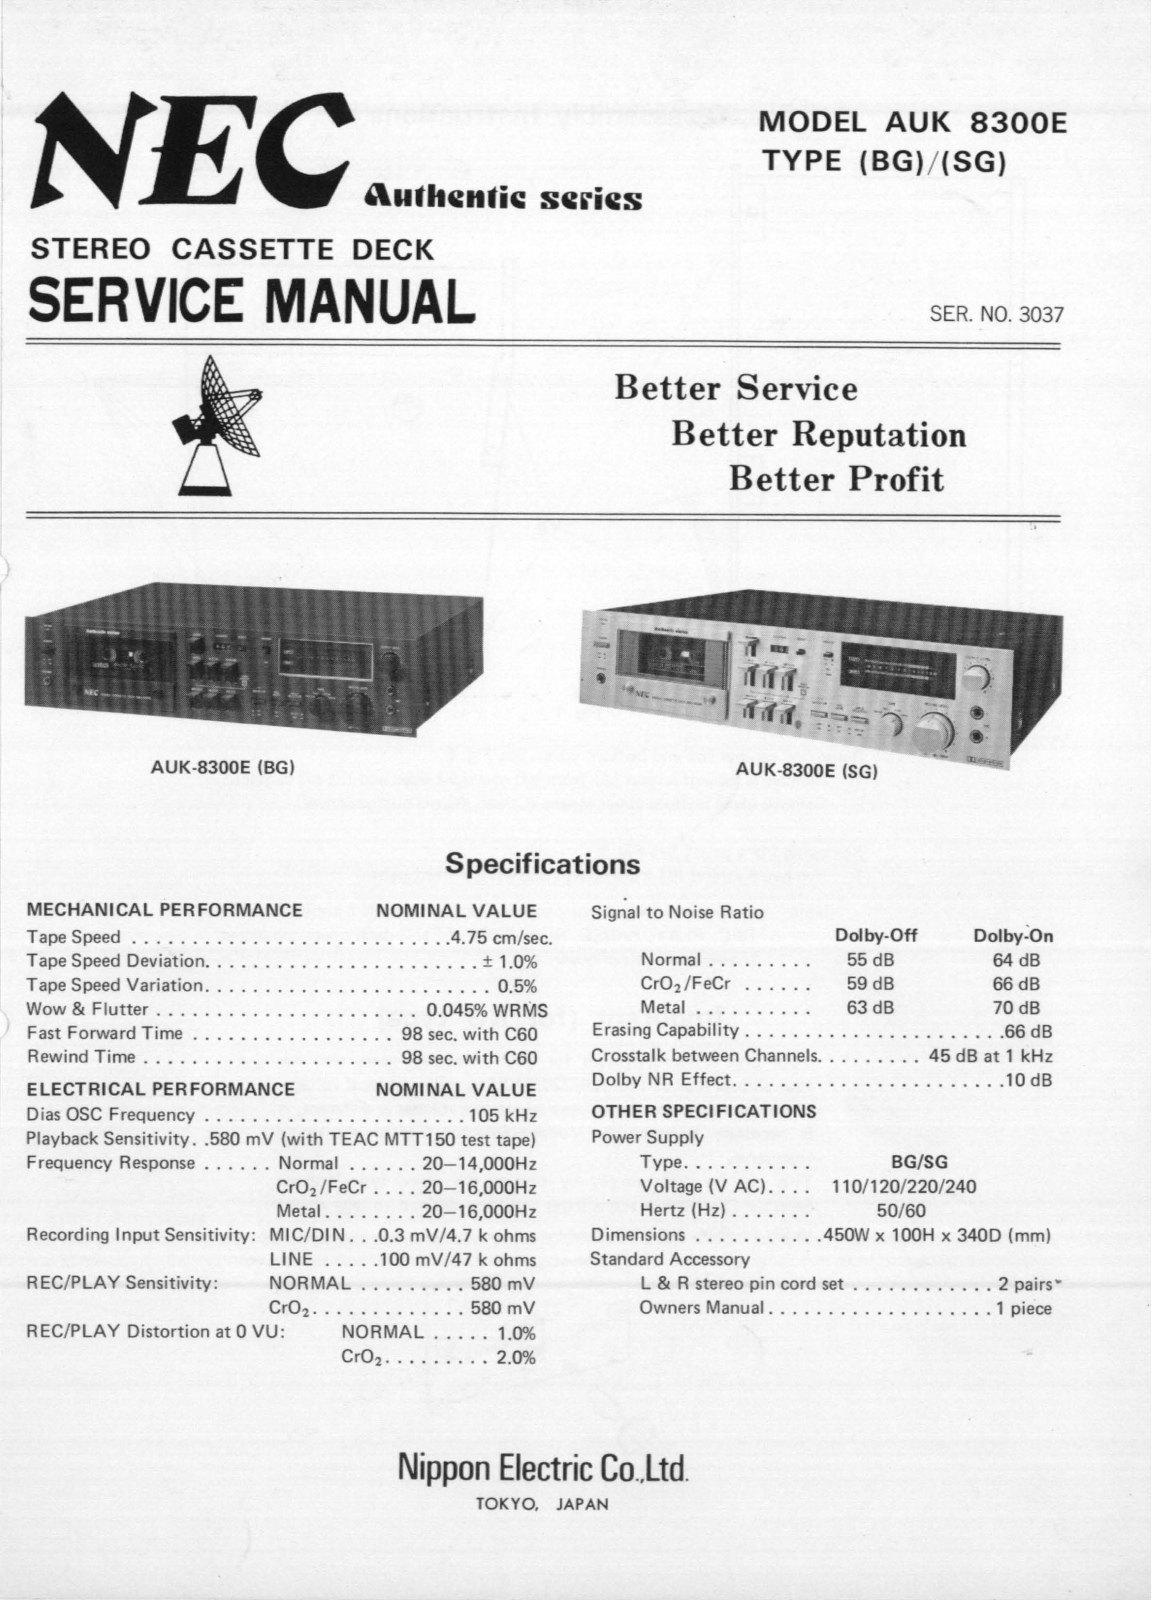 Nec AUK-8300-E Service Manual